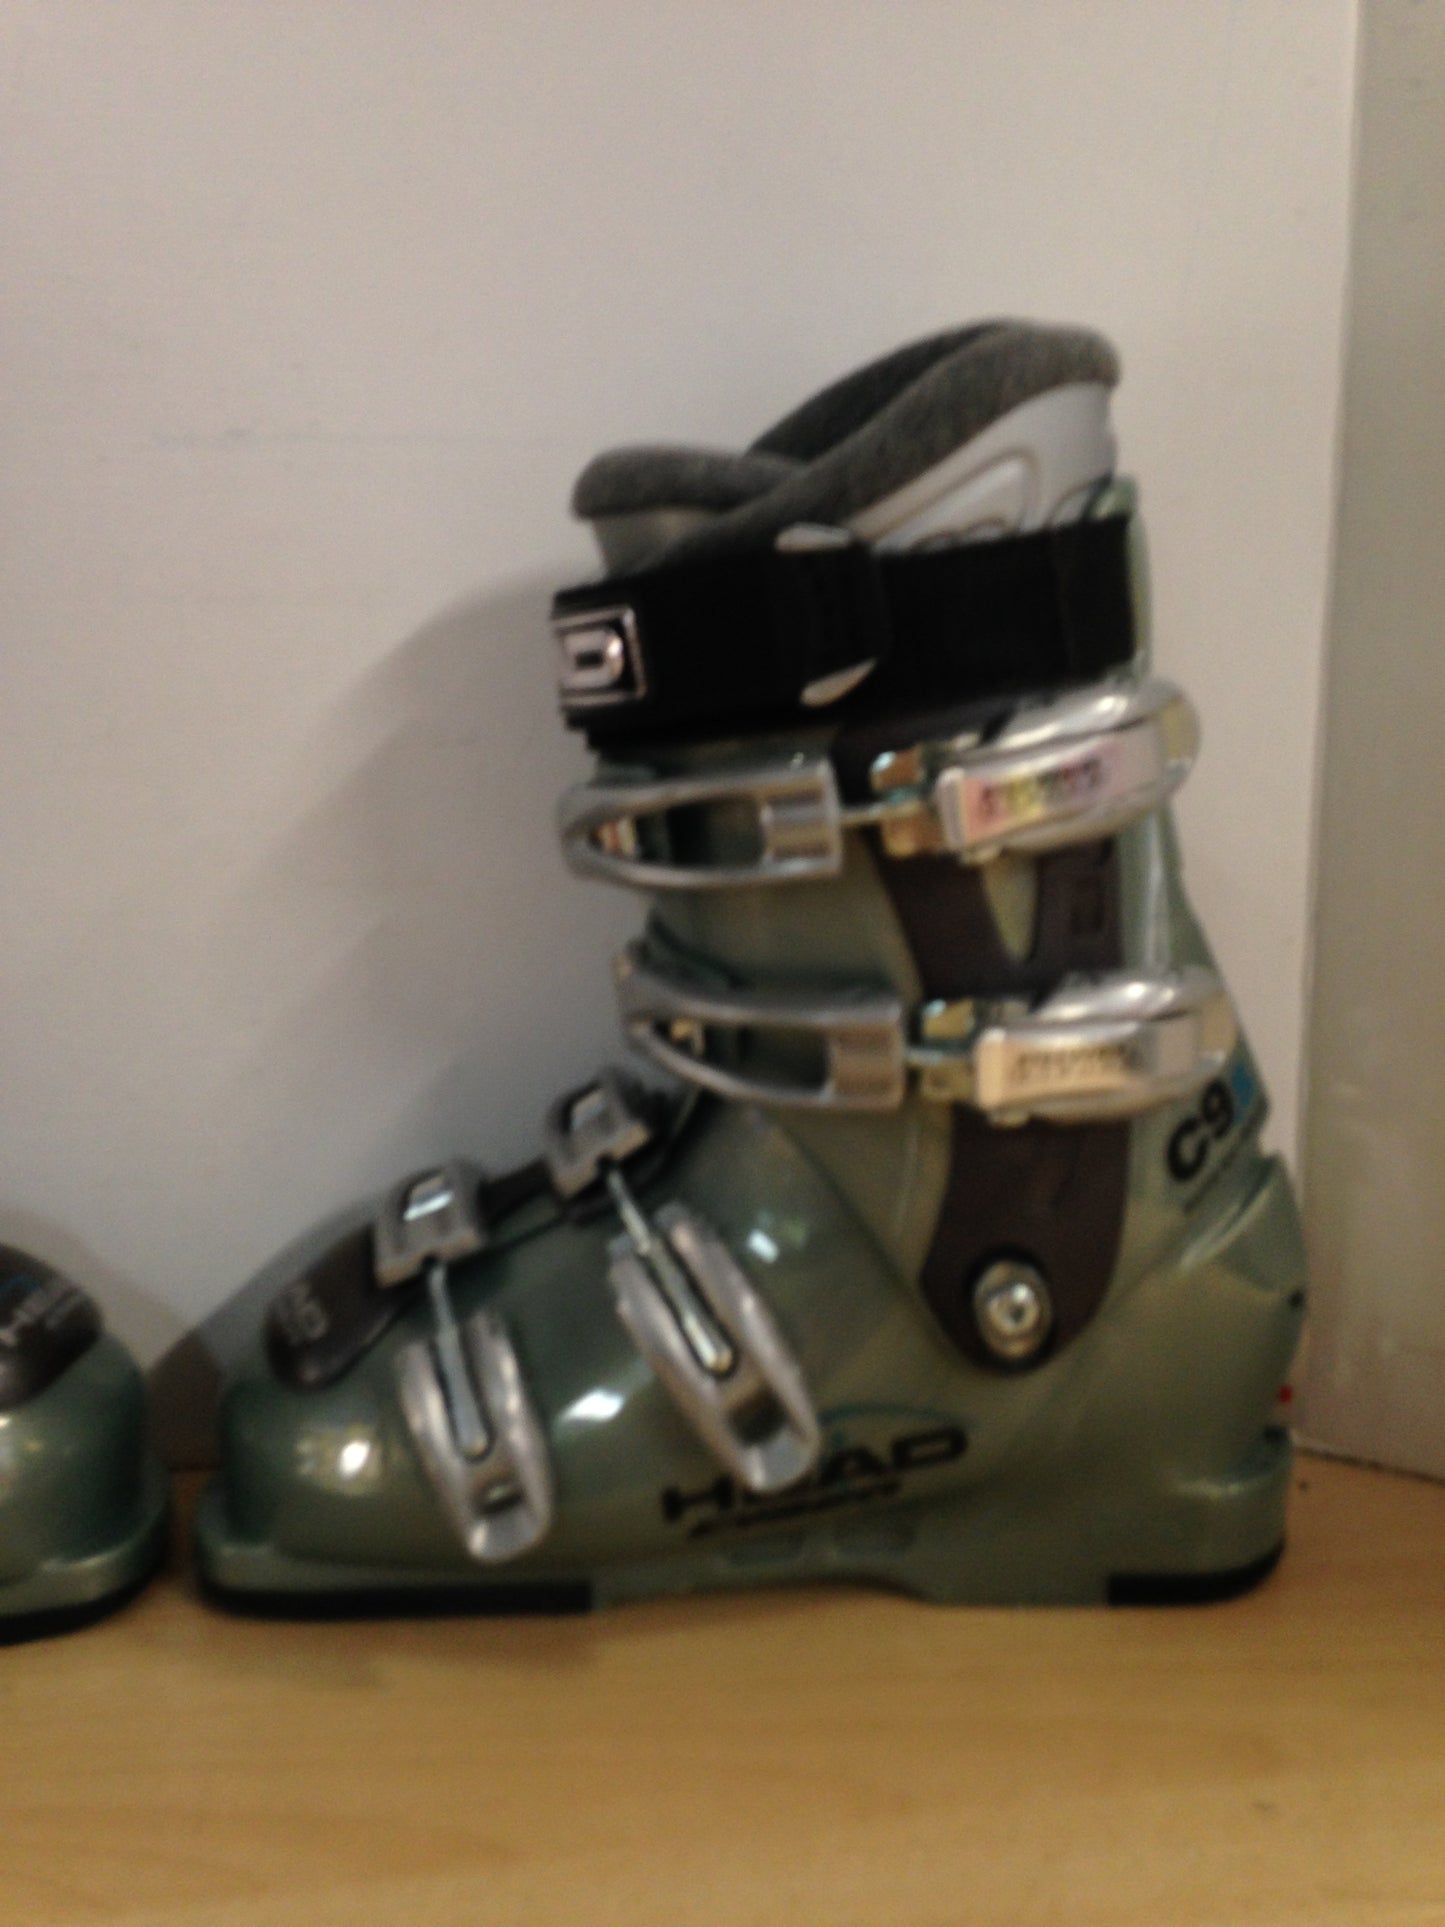 Ski Boots Mondo Size 23.5 Ladies Size 6.5 276 mm Head Sage Grey Excellent